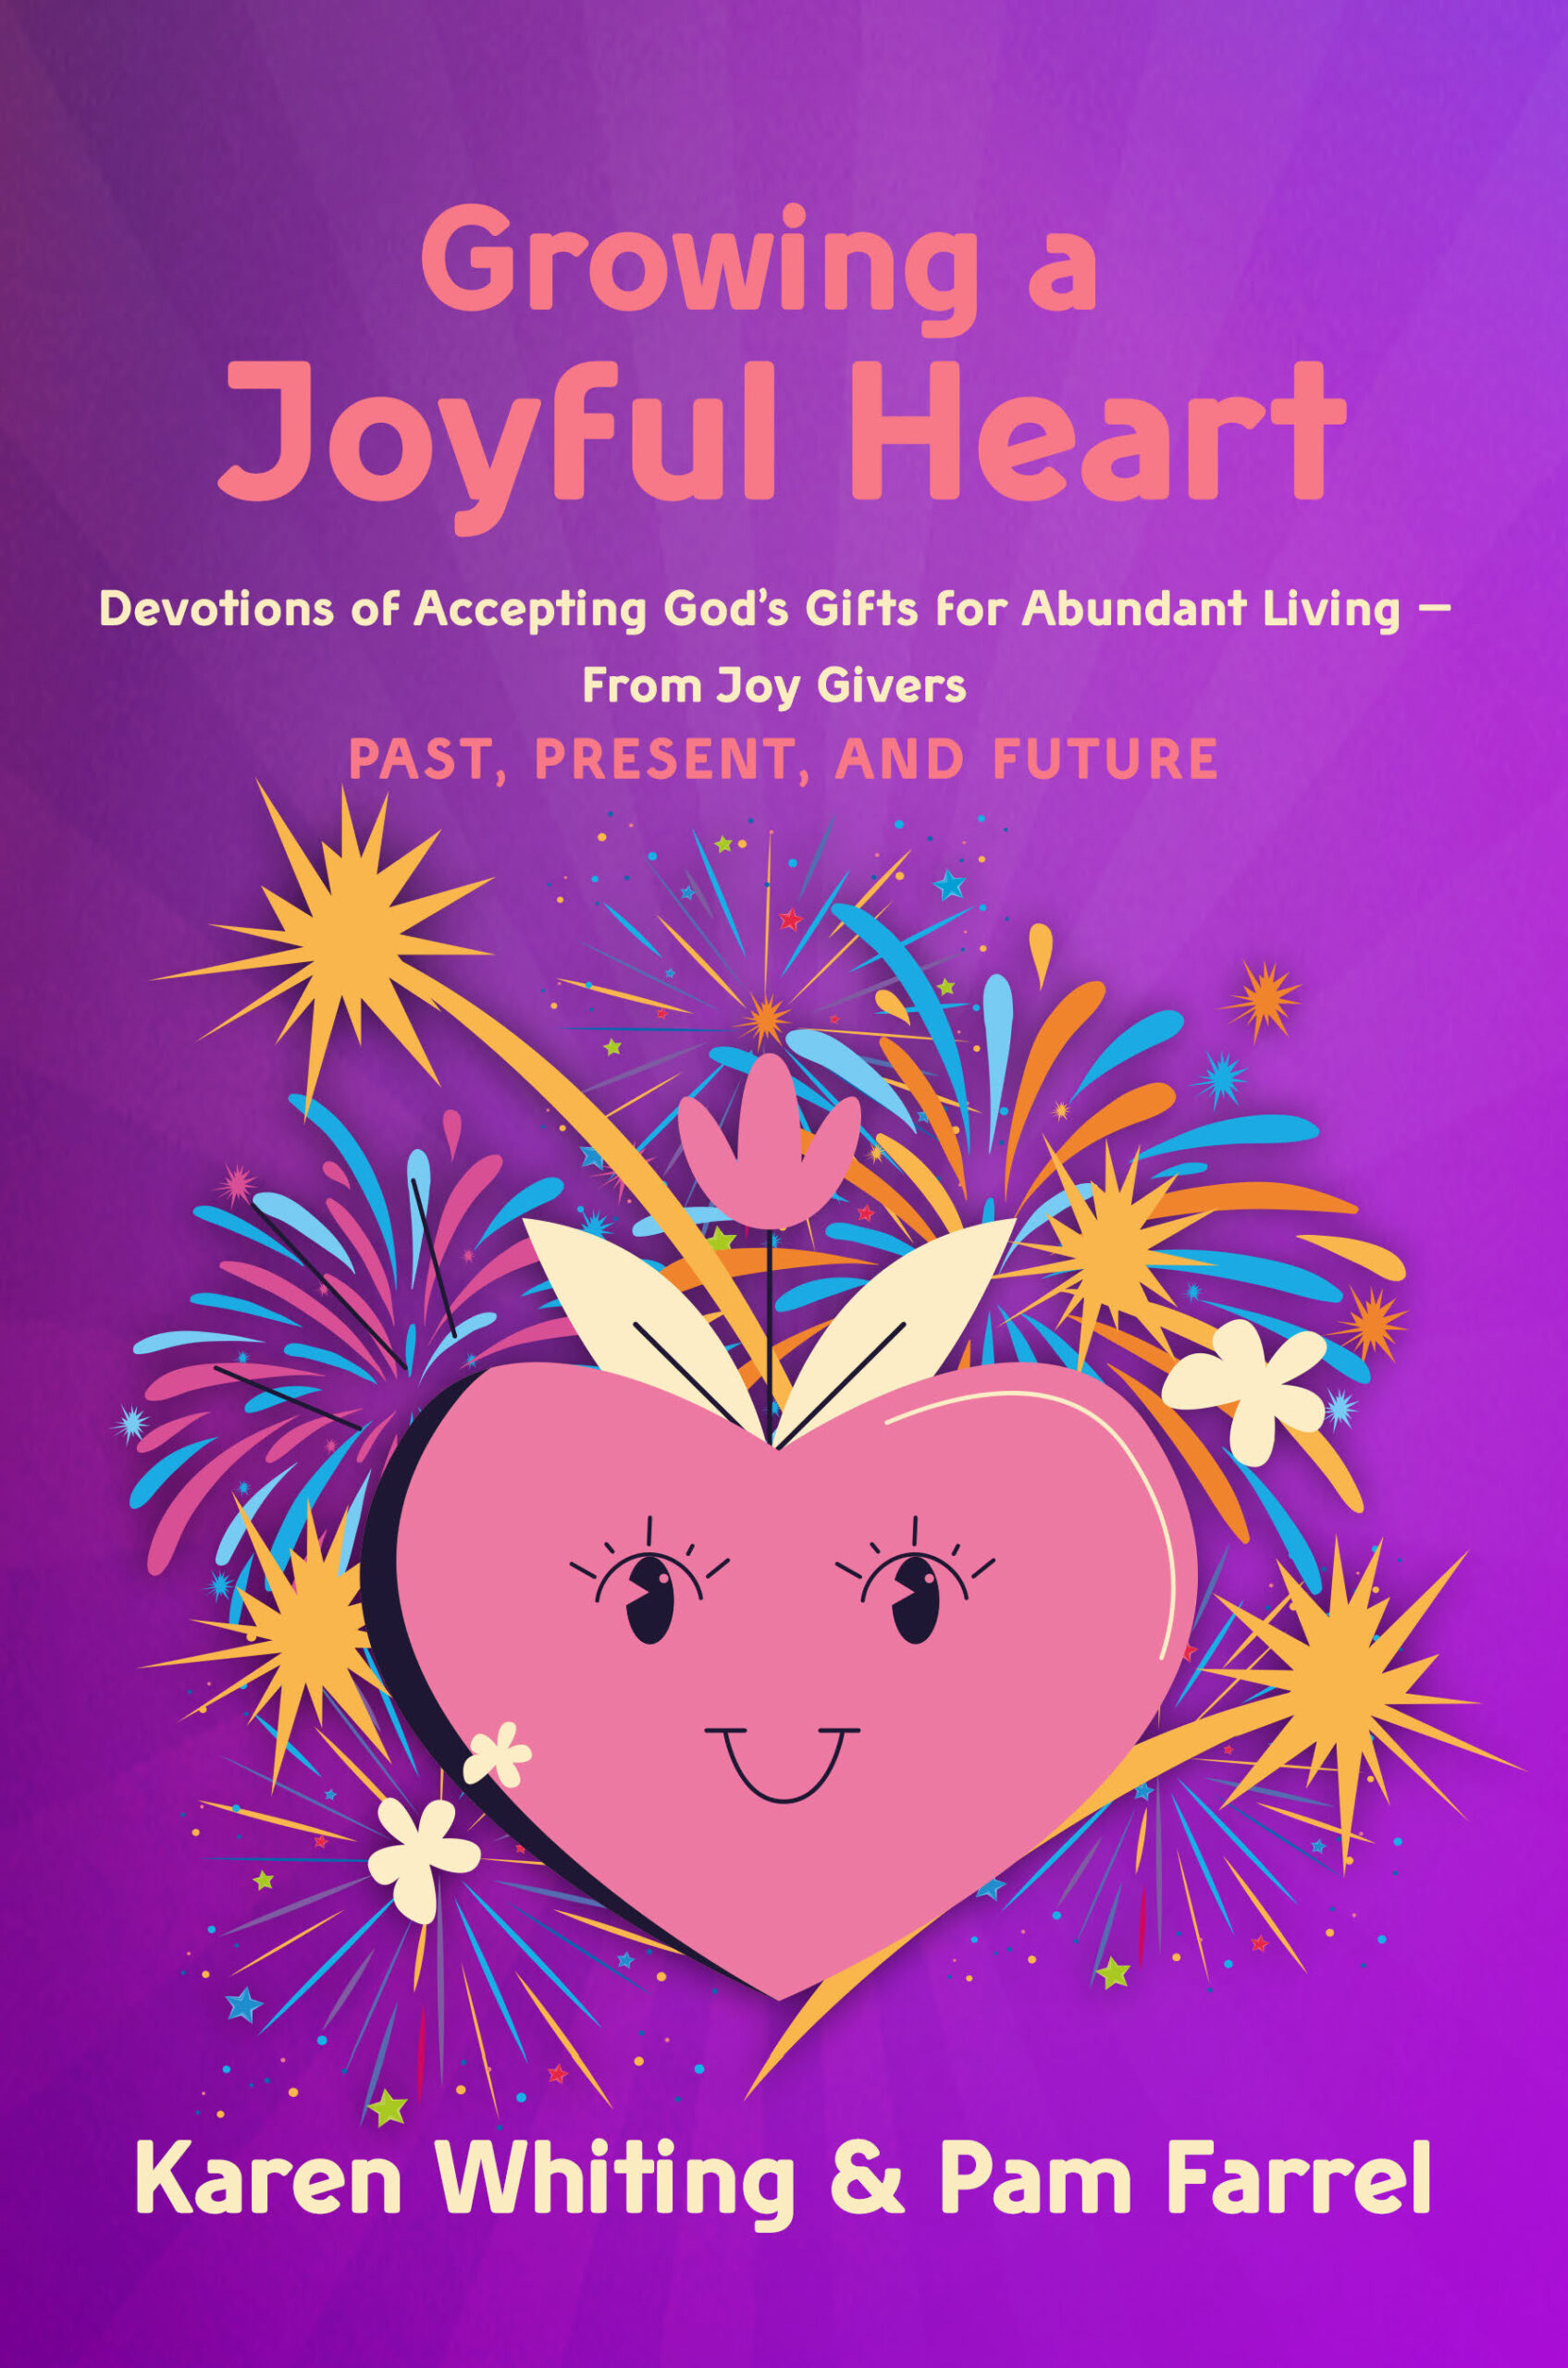 Book Drawing: “Growing a Joyful Heart” by Karen Whiting and Pam Farrel